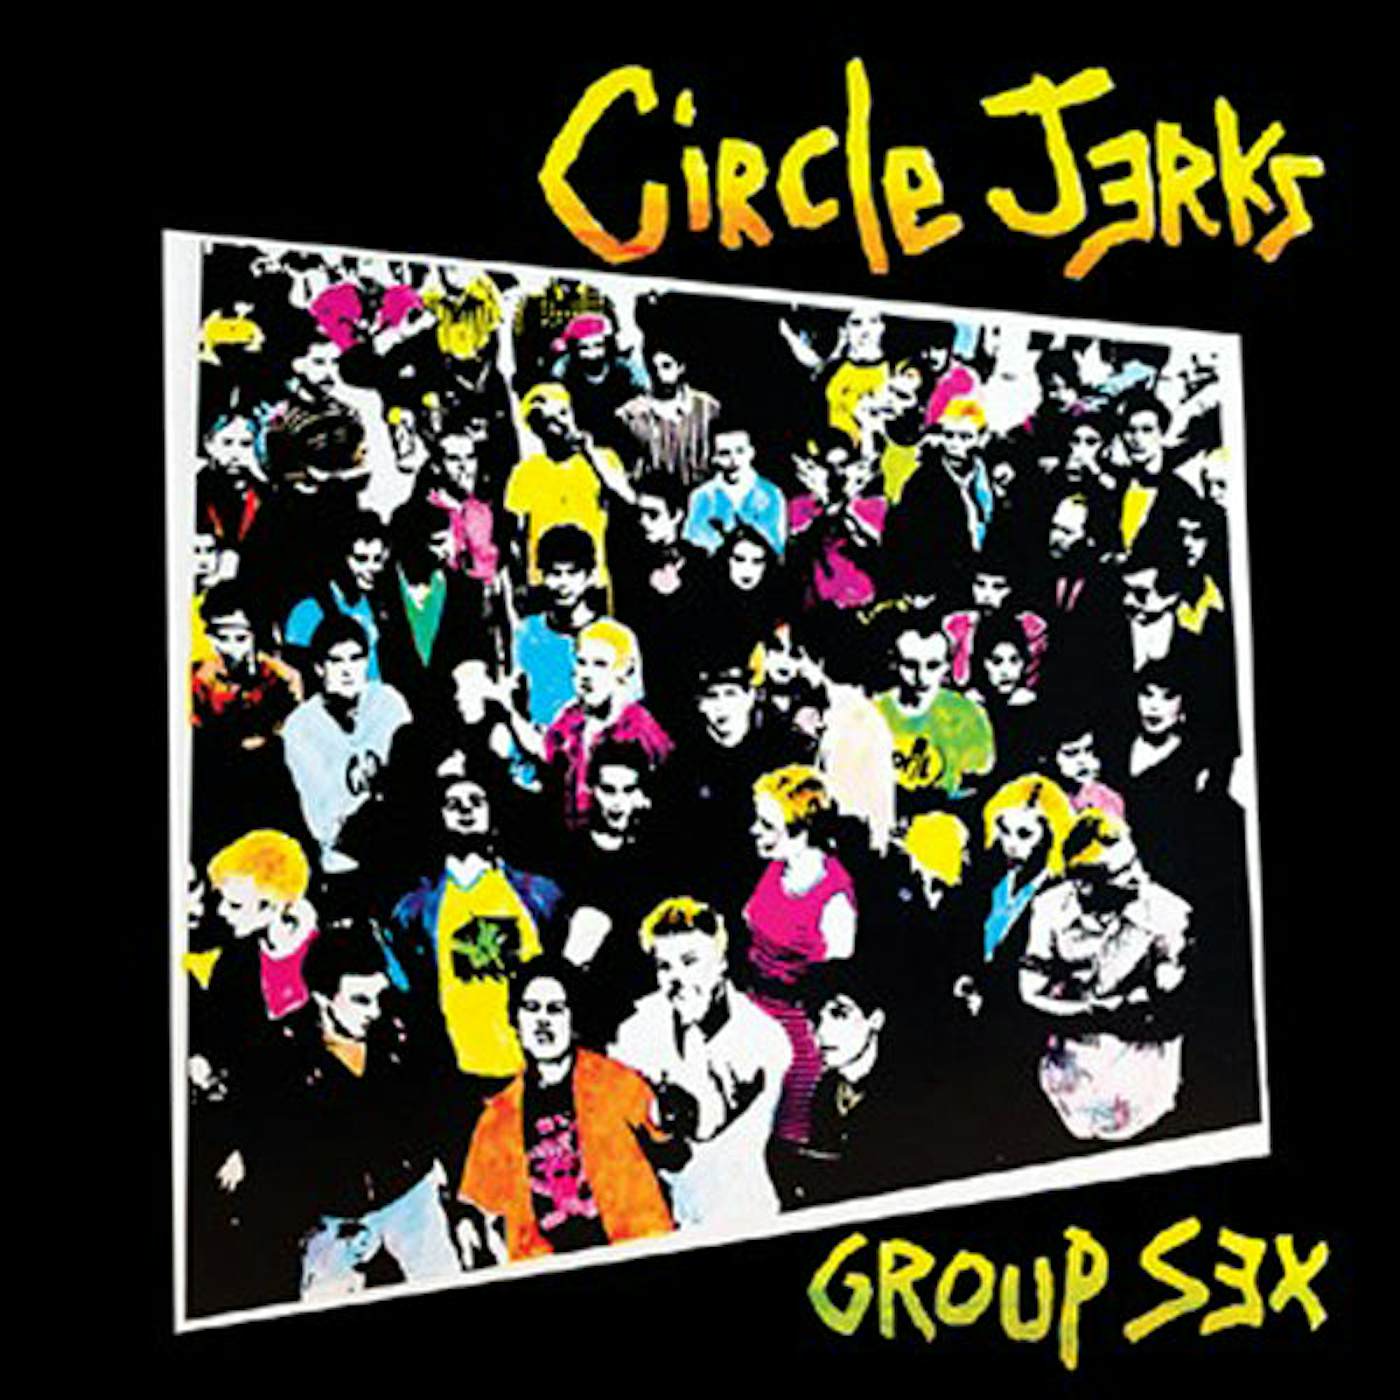 Circle Jerks LP - Group Sex: 40Th Anniversary Edition (Lp+Booklet) (Vinyl)